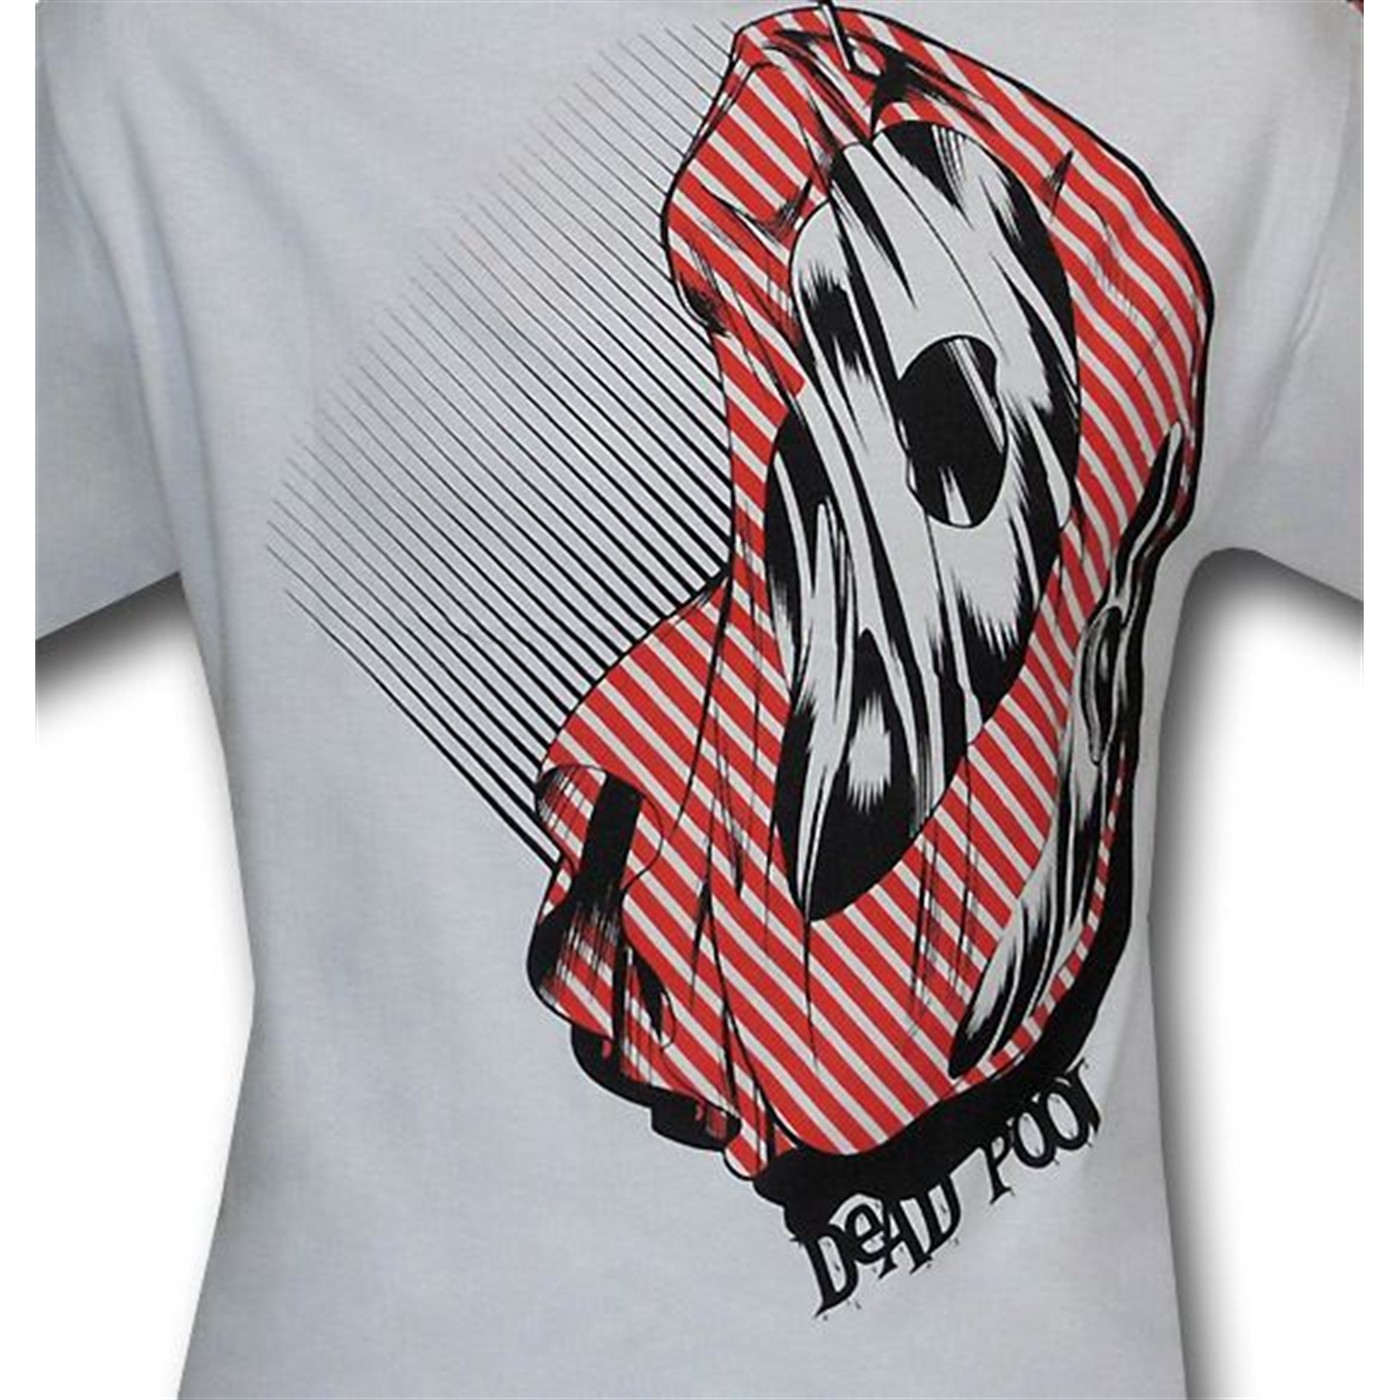 Deadpool All Over Print T-Shirt